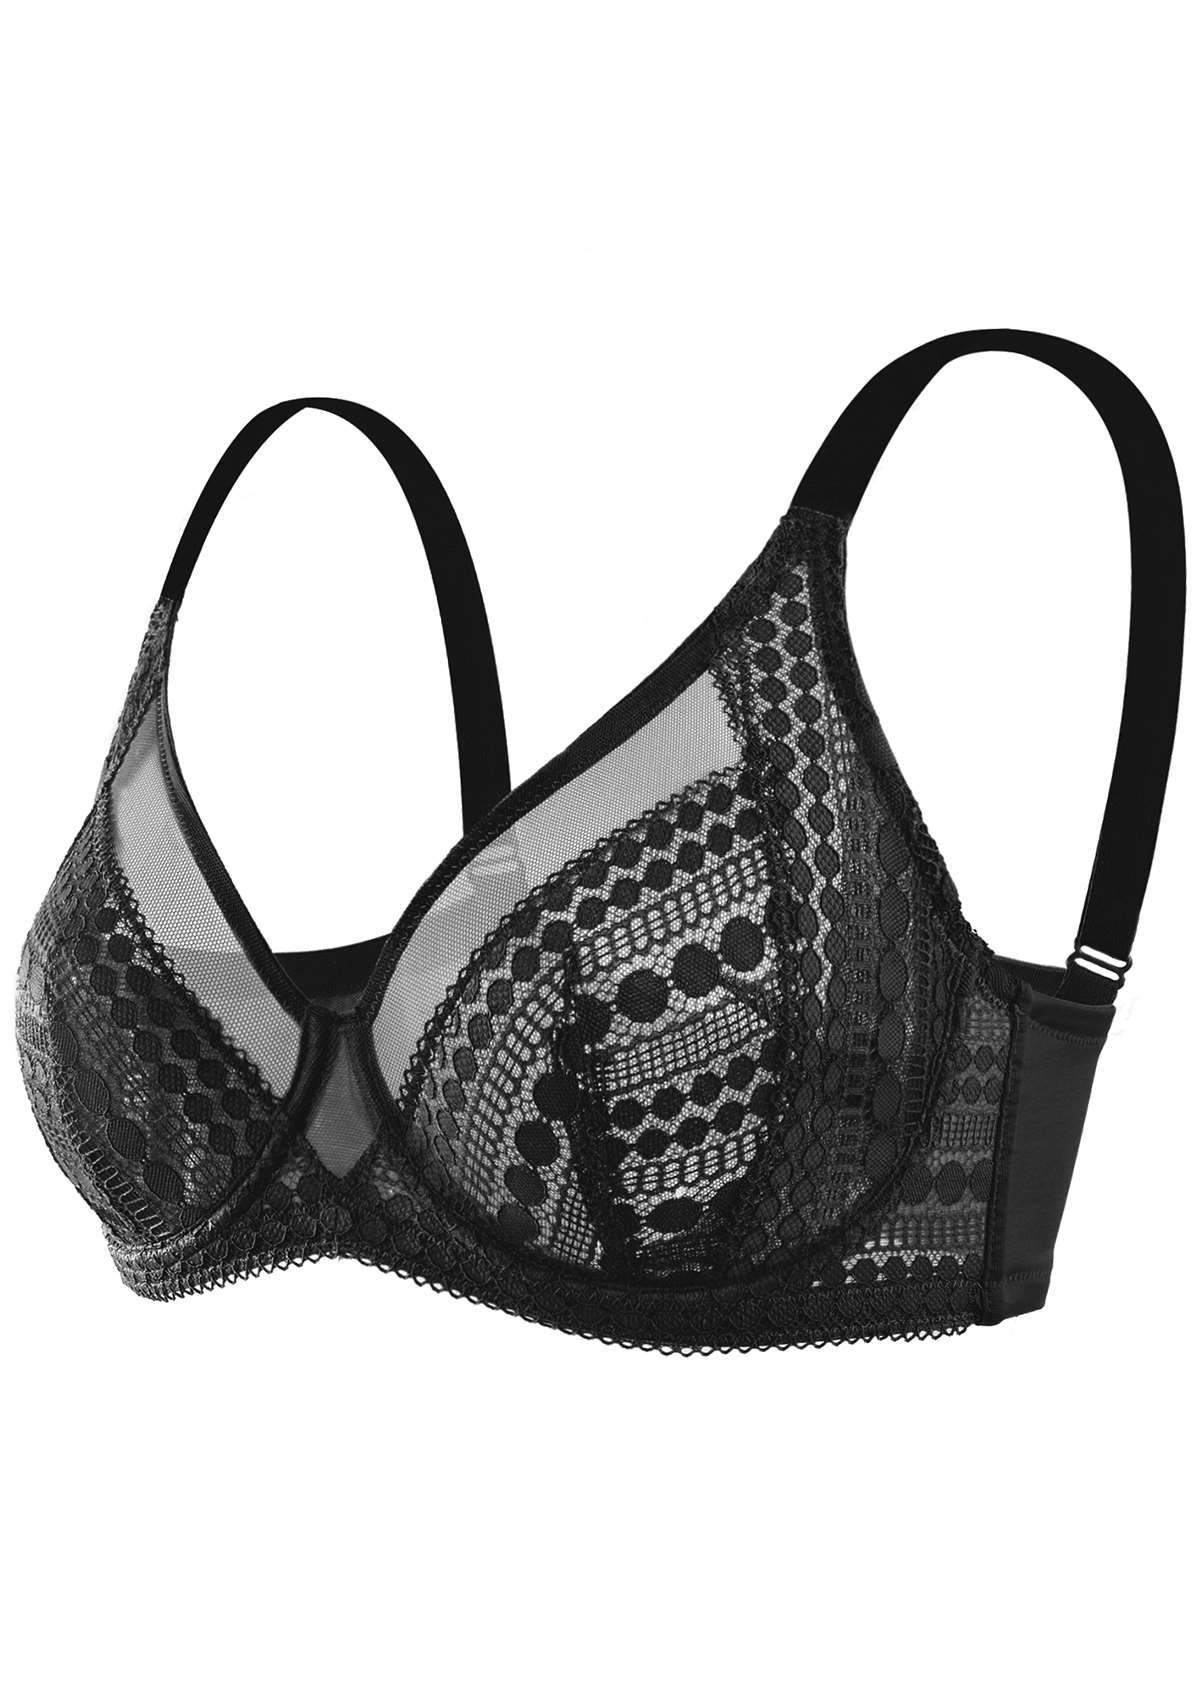 HSIA Heroine Matching Bra And Panties: Unlined Lace Unpadded Bra - Black / 42 / DD/E